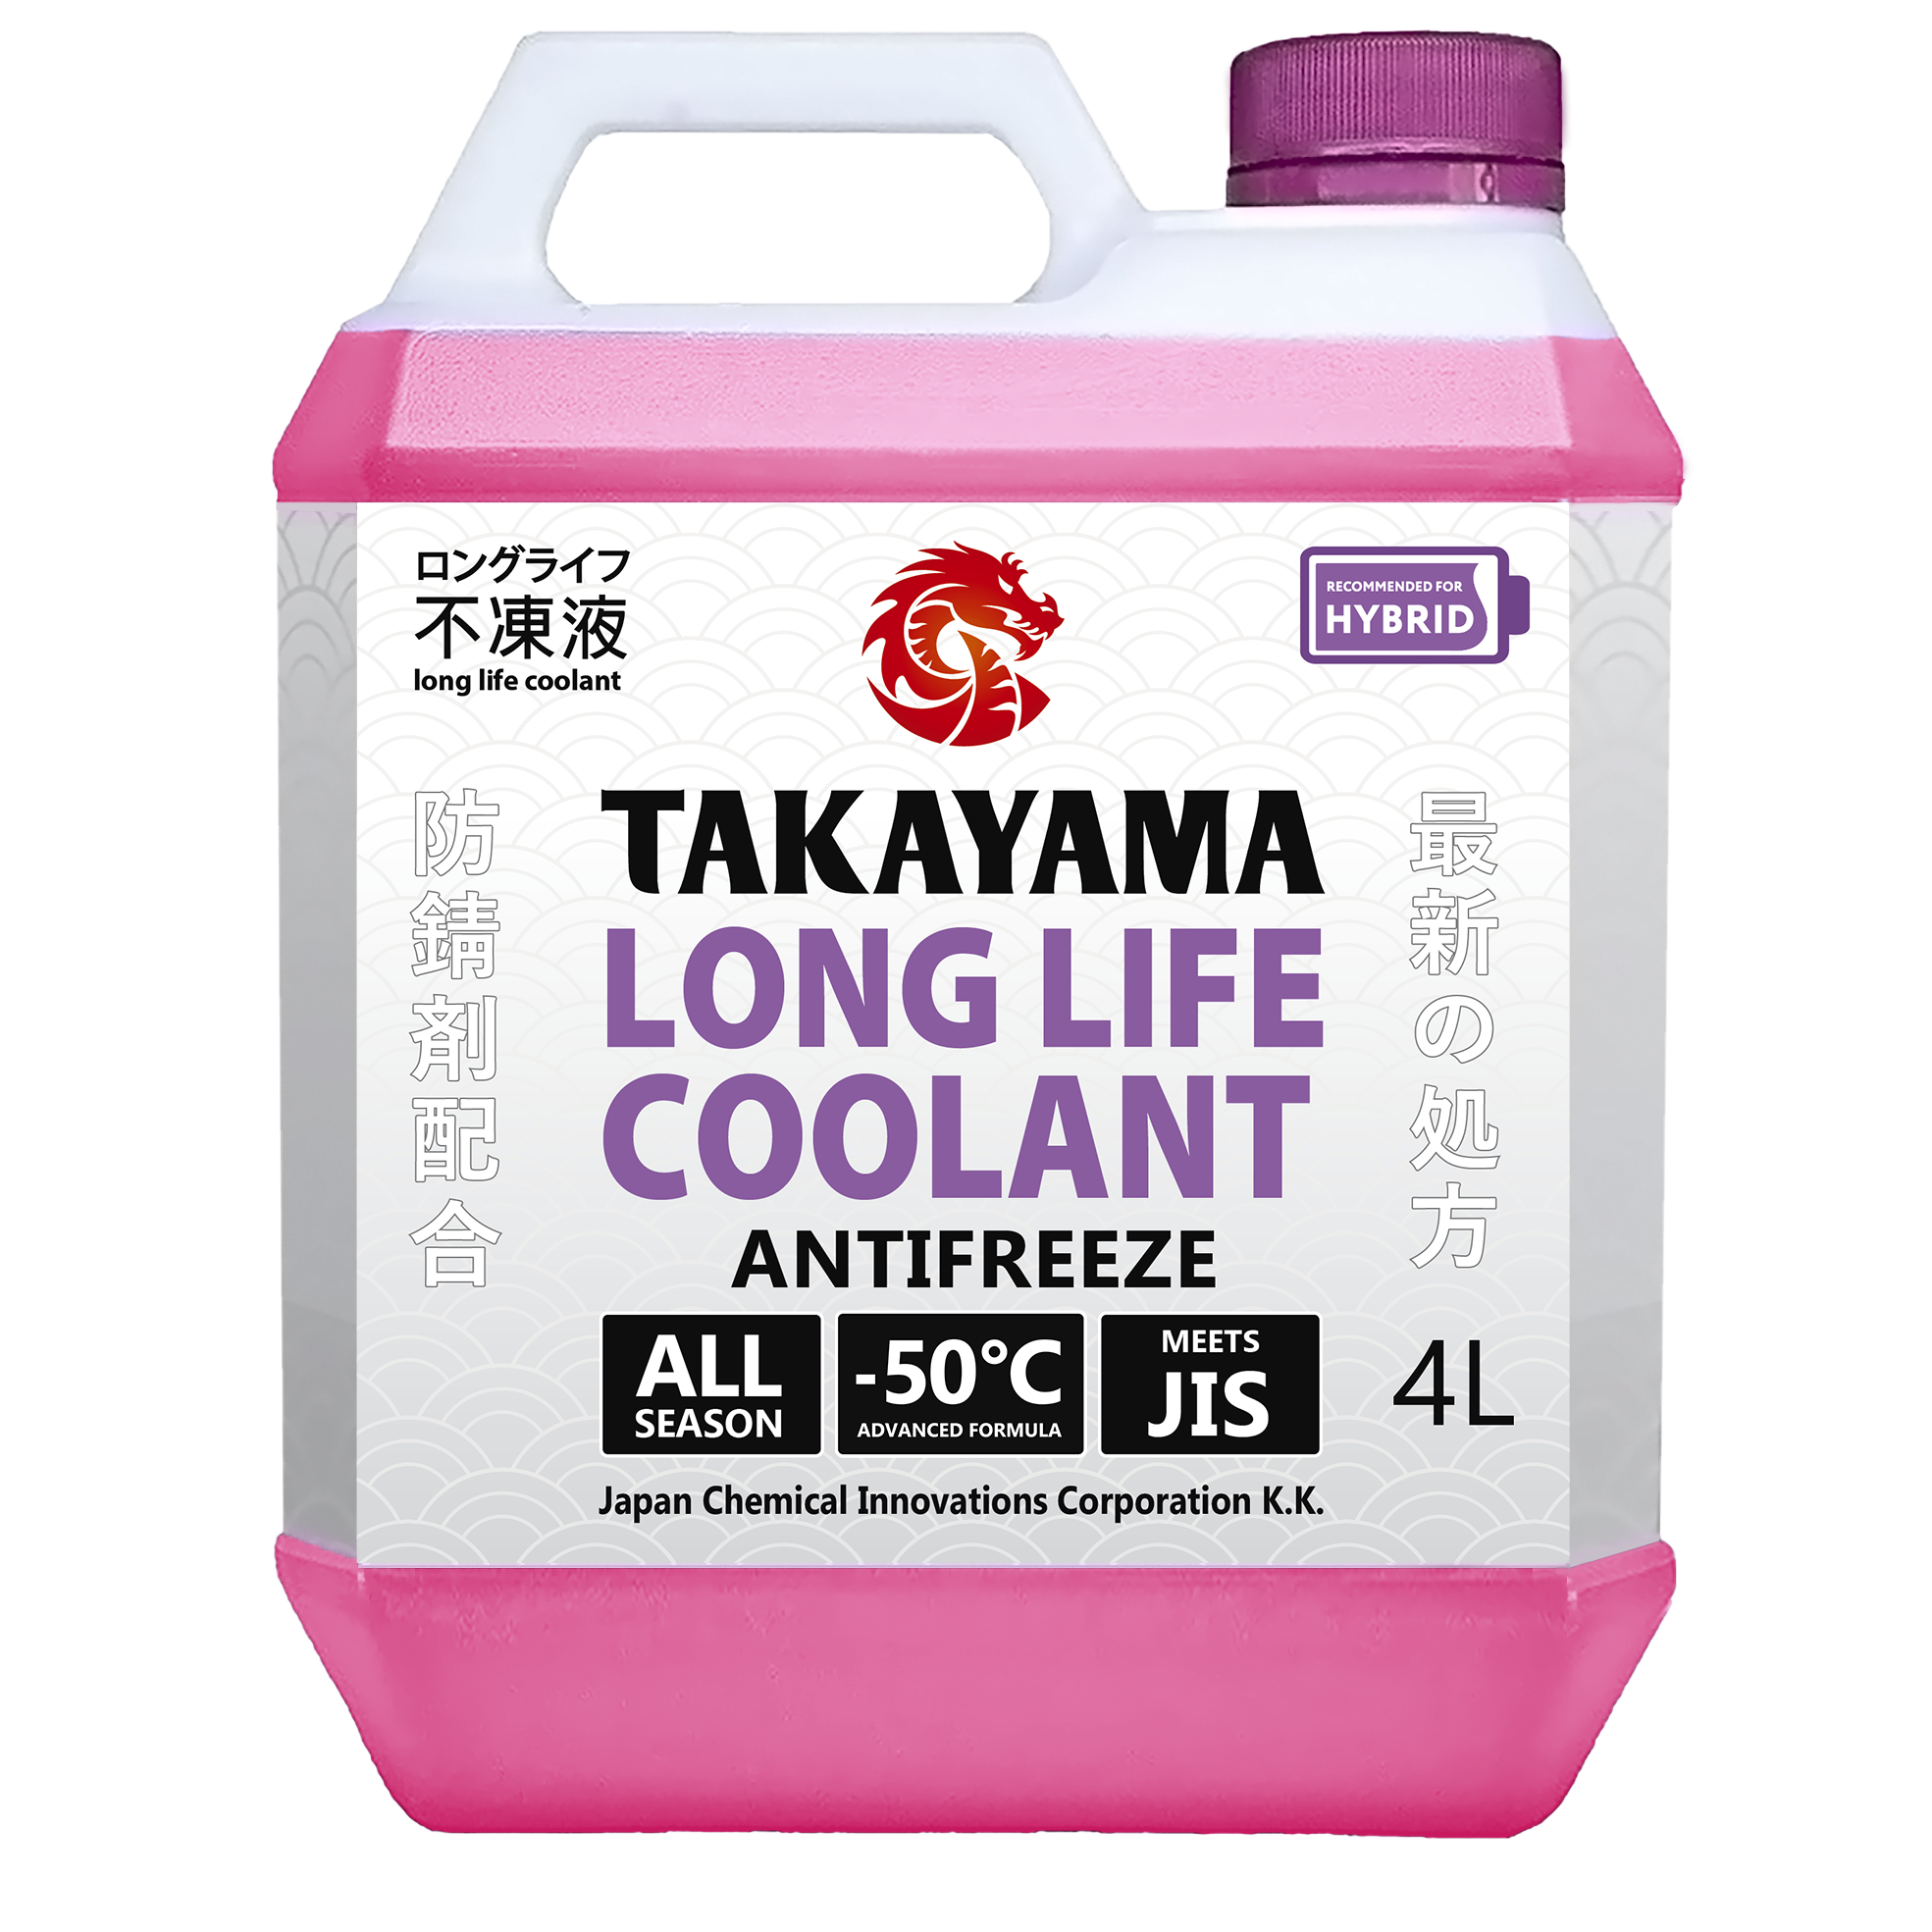 фото Антифриз takayama long life coolant hybrid (-50) розовый 4 л